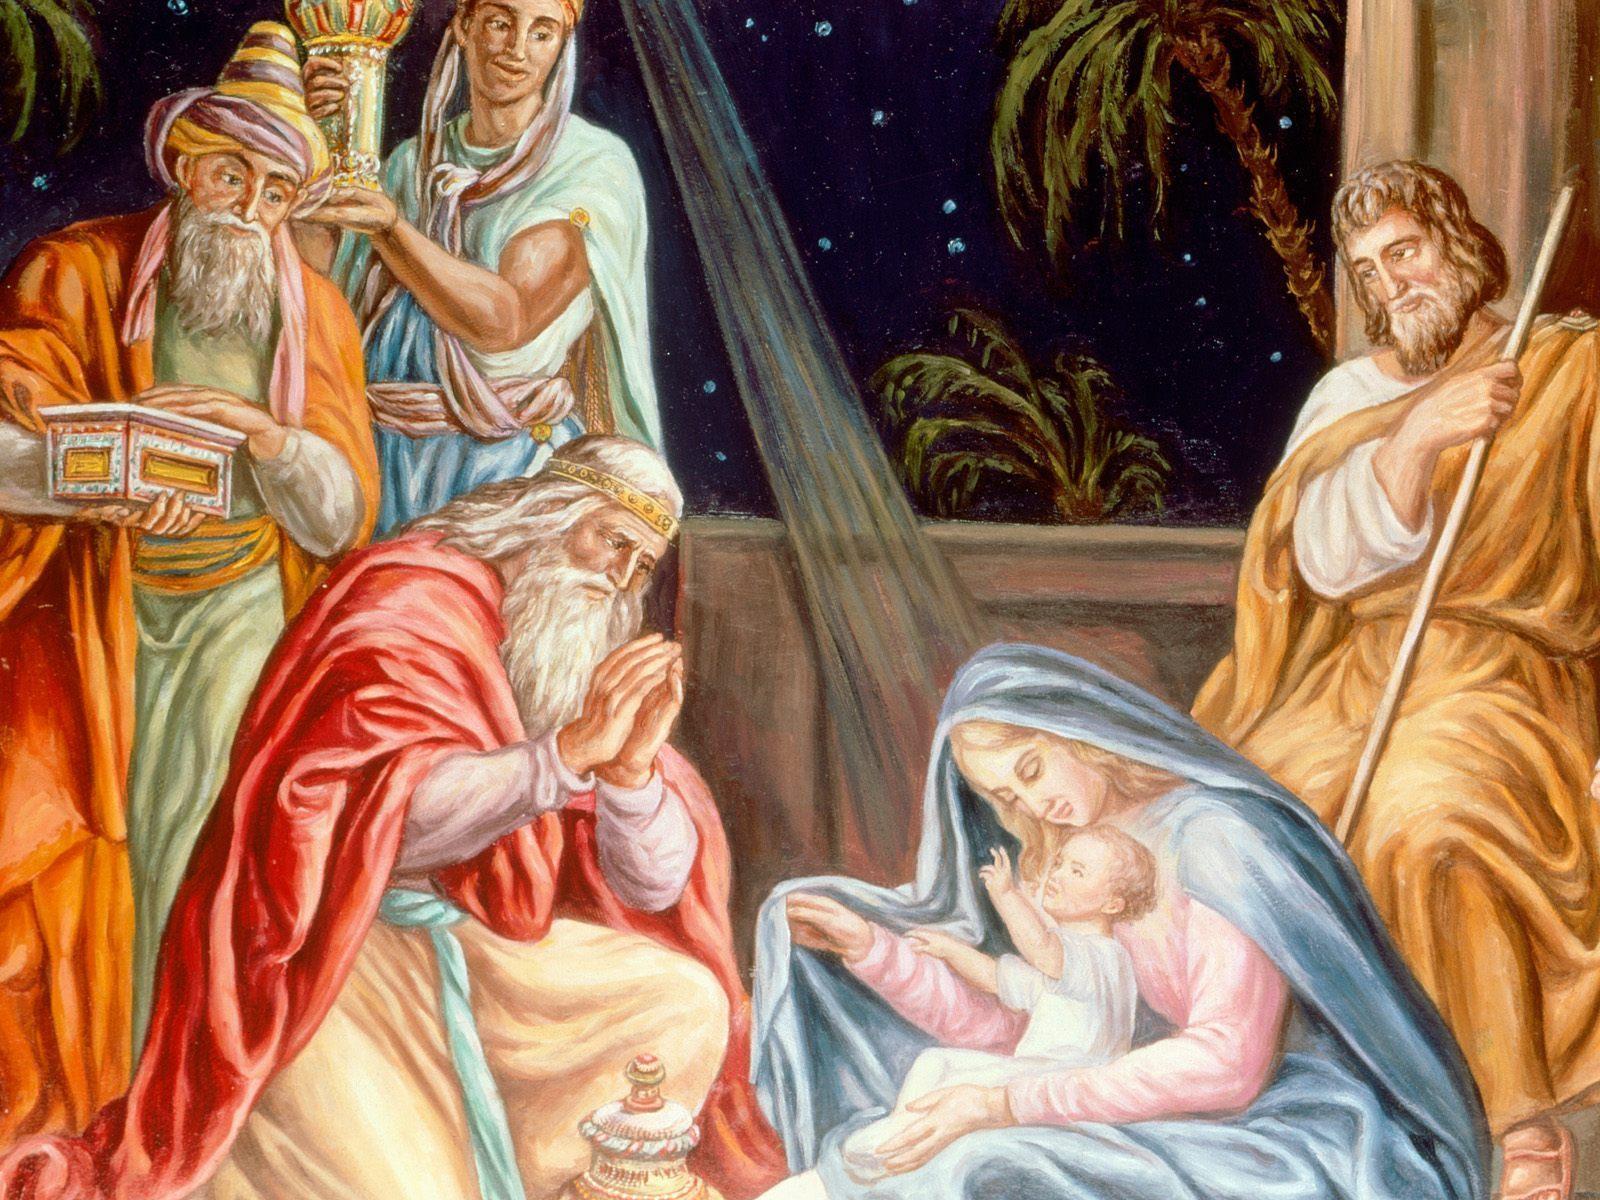 Jesus Christ was born